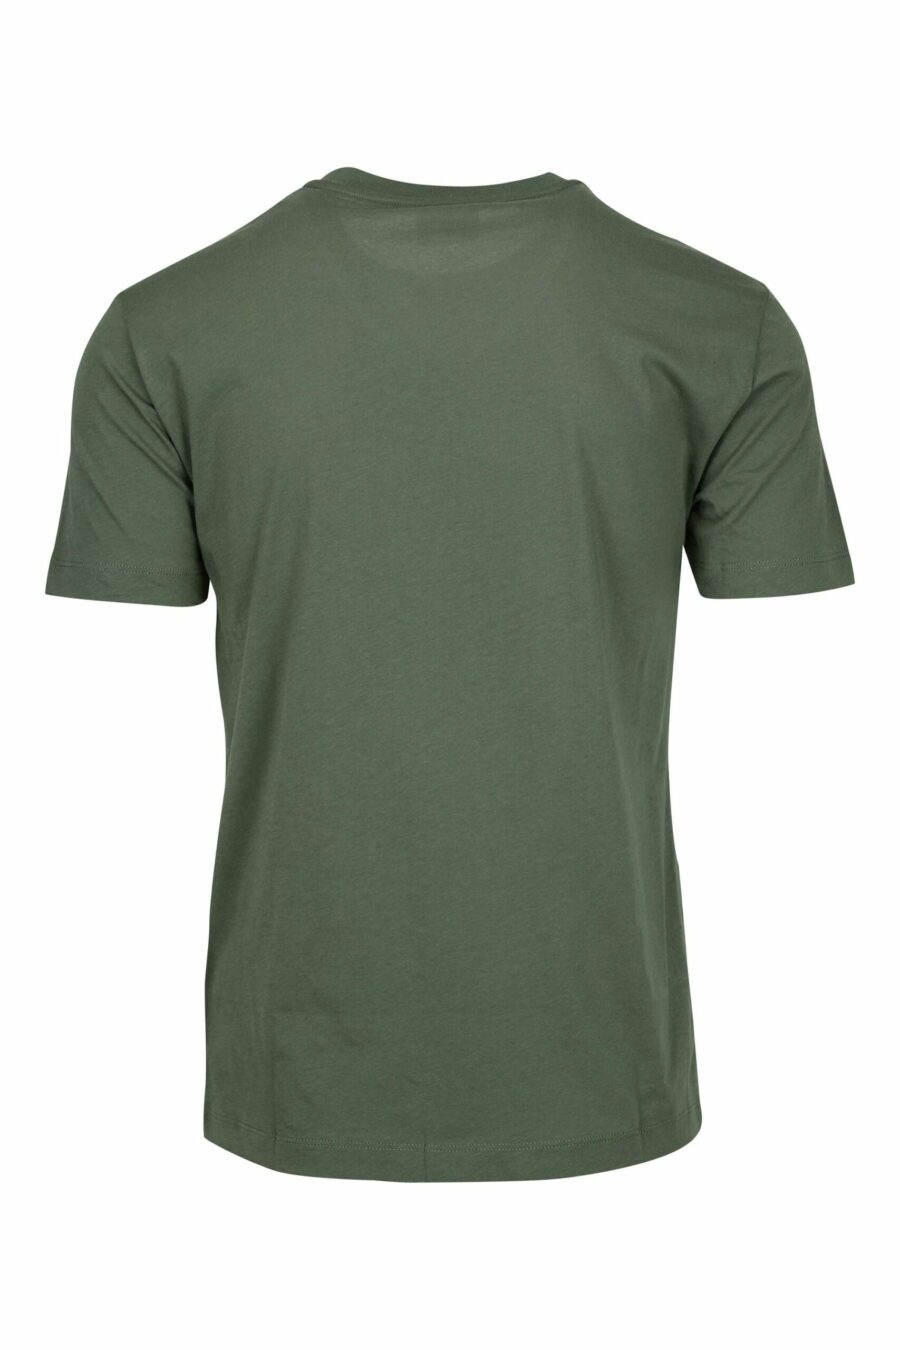 Camiseta verde con maxilogo "lux identity" en degradé - 8058947508334 1 scaled